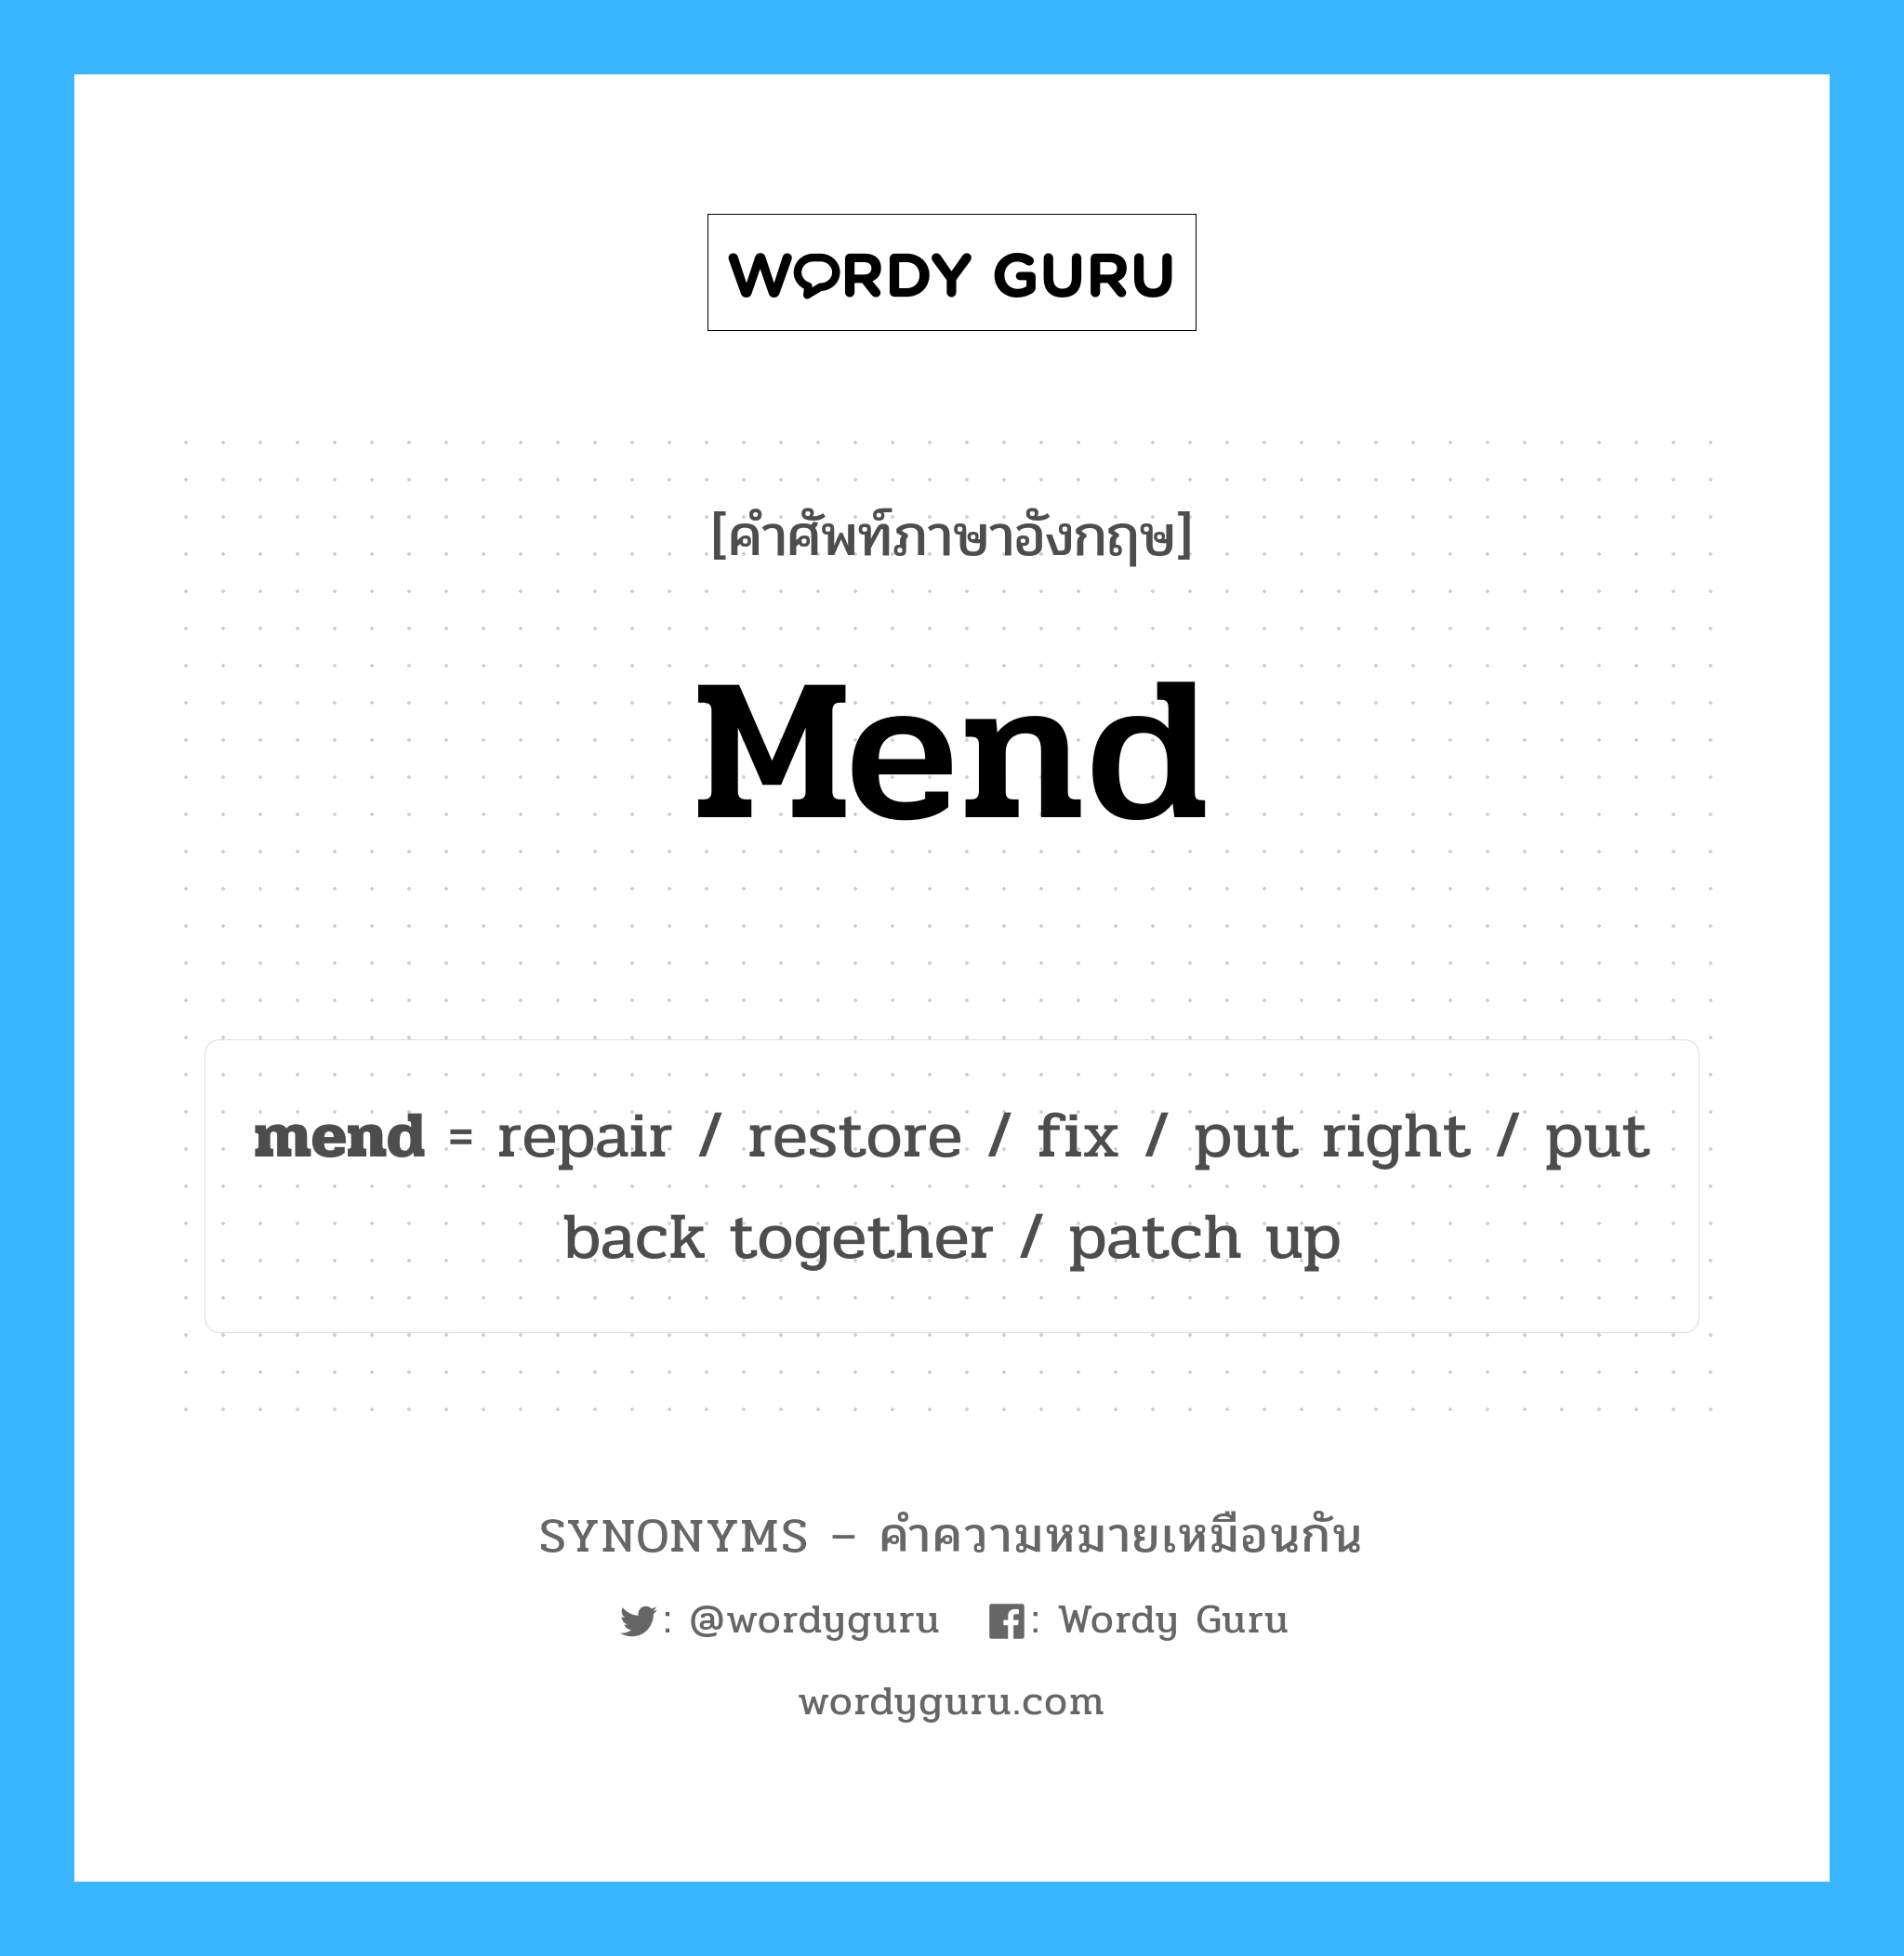 restore เป็นหนึ่งใน mend และมีคำอื่น ๆ อีกดังนี้, คำศัพท์ภาษาอังกฤษ restore ความหมายคล้ายกันกับ mend แปลว่า การคืนค่า หมวด mend